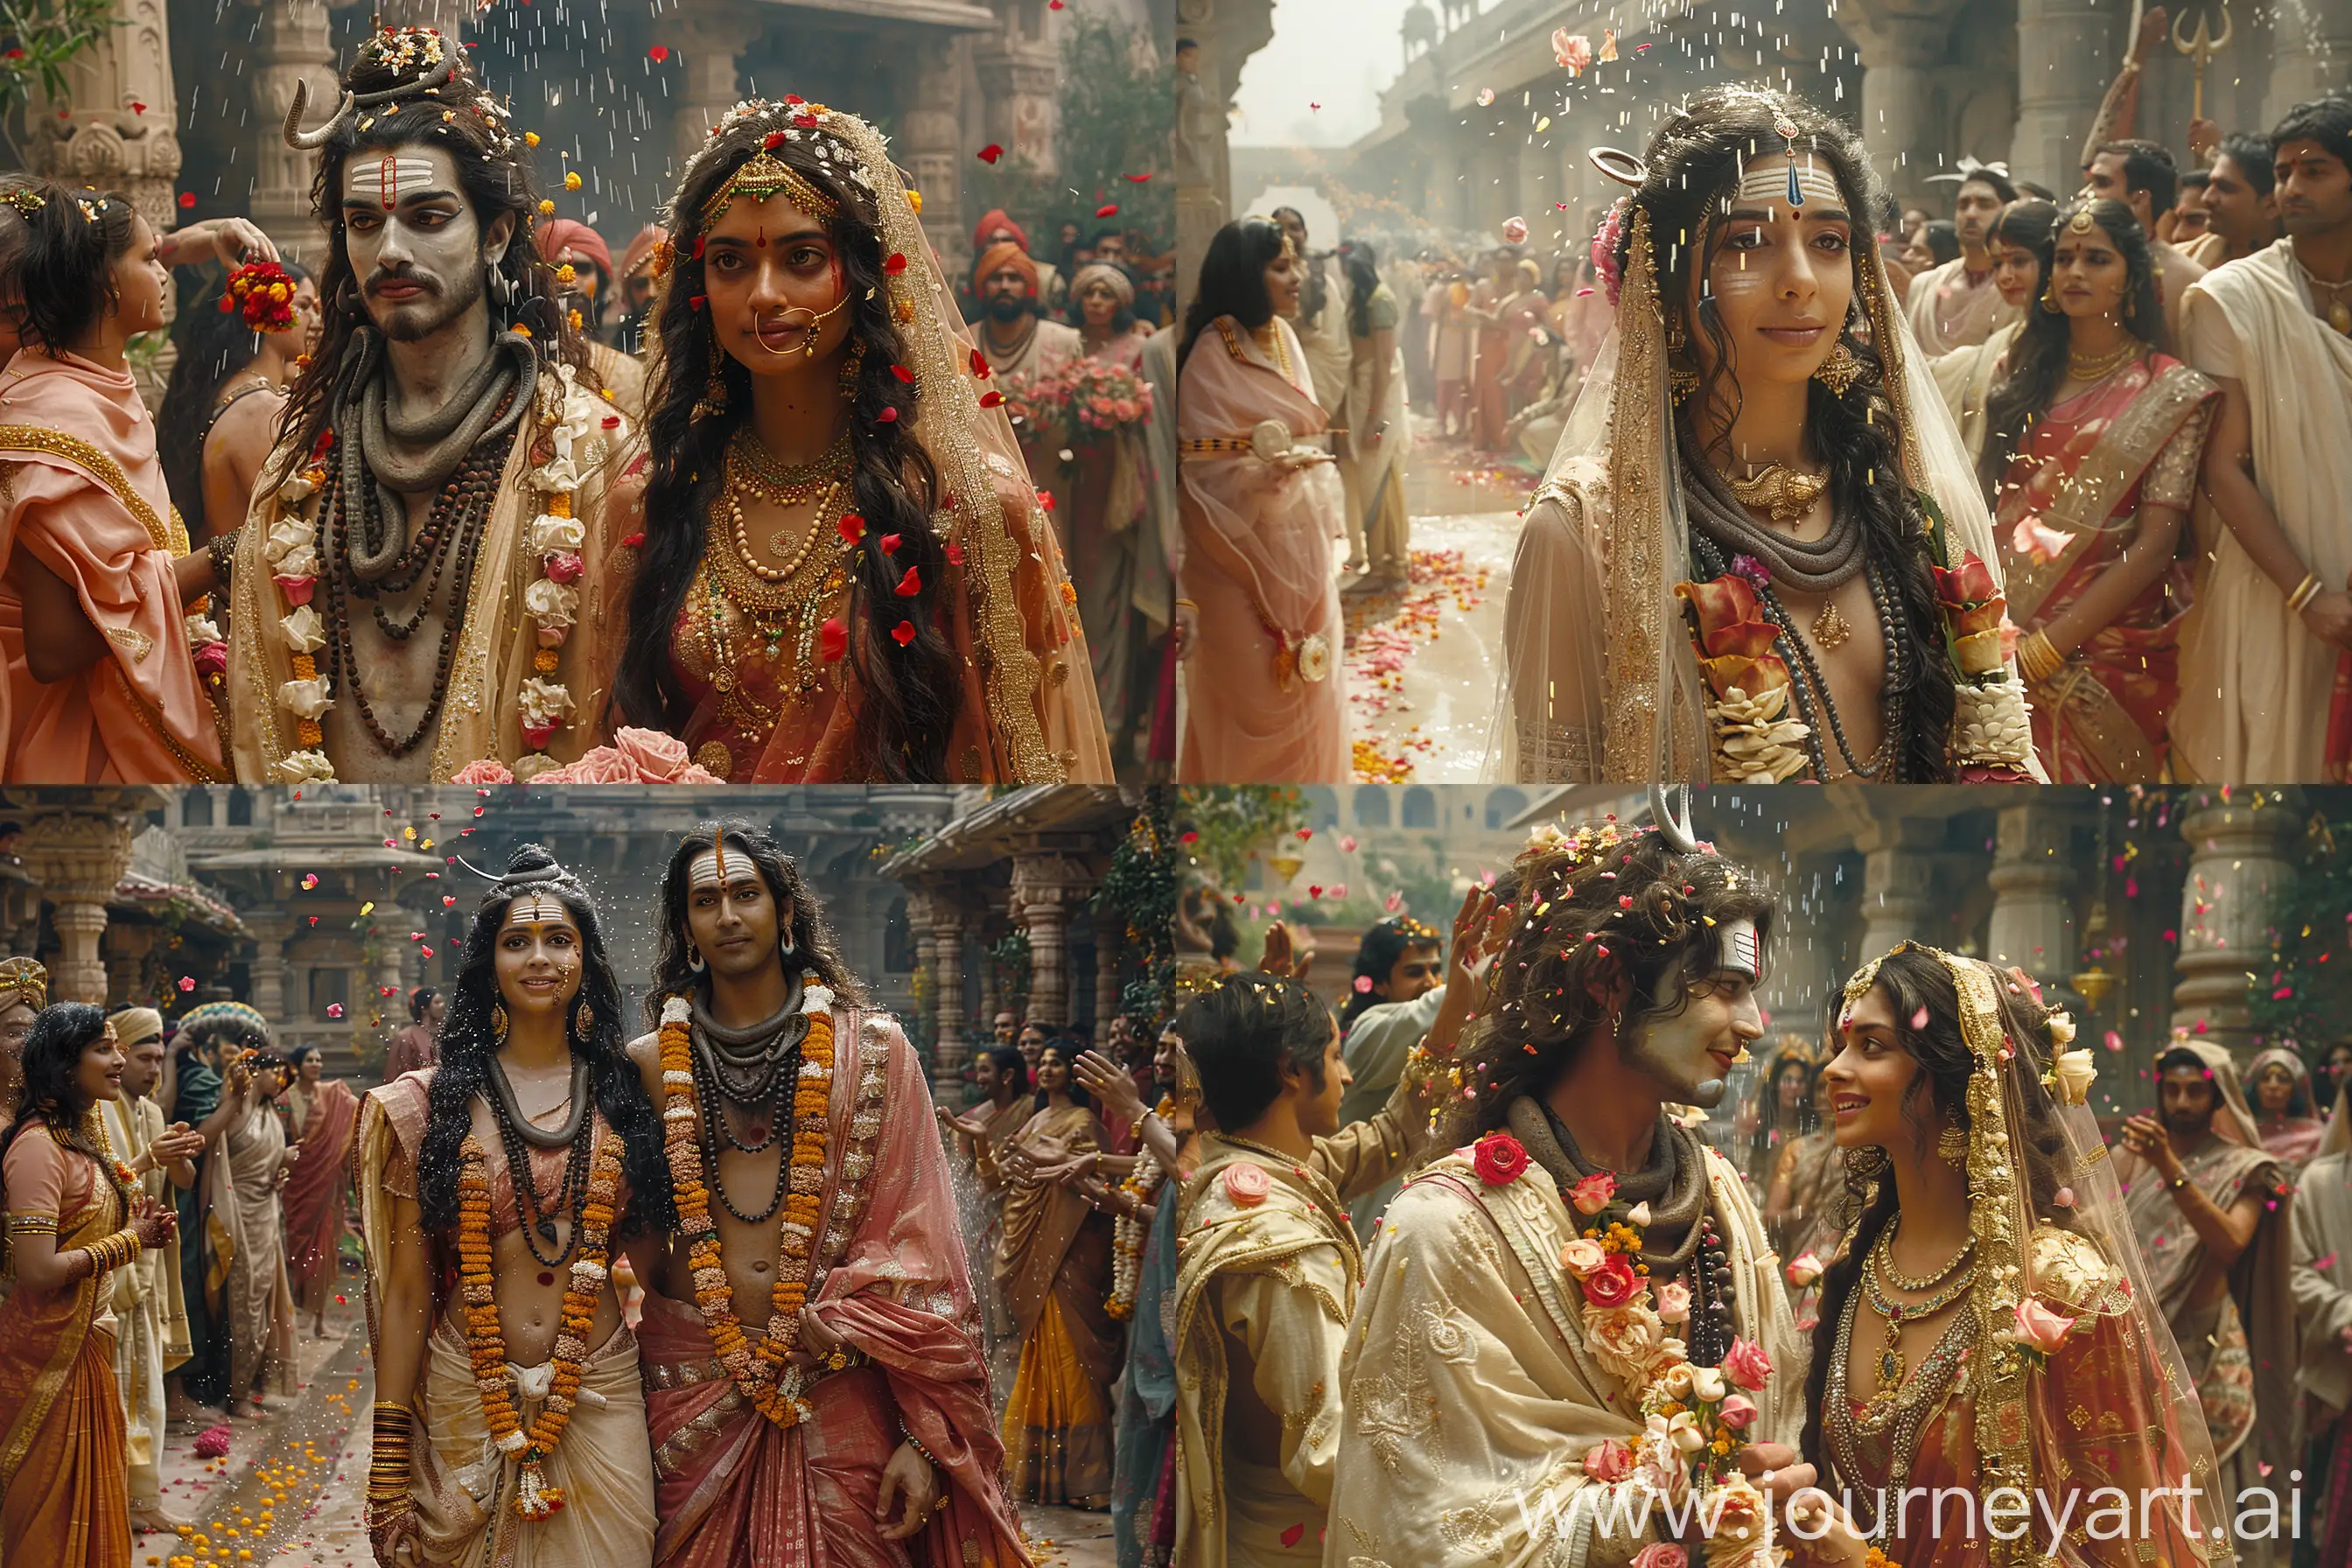 Lavish-Ancient-Indian-Wedding-Ceremony-of-Lord-Shiva-and-Goddess-Parvati